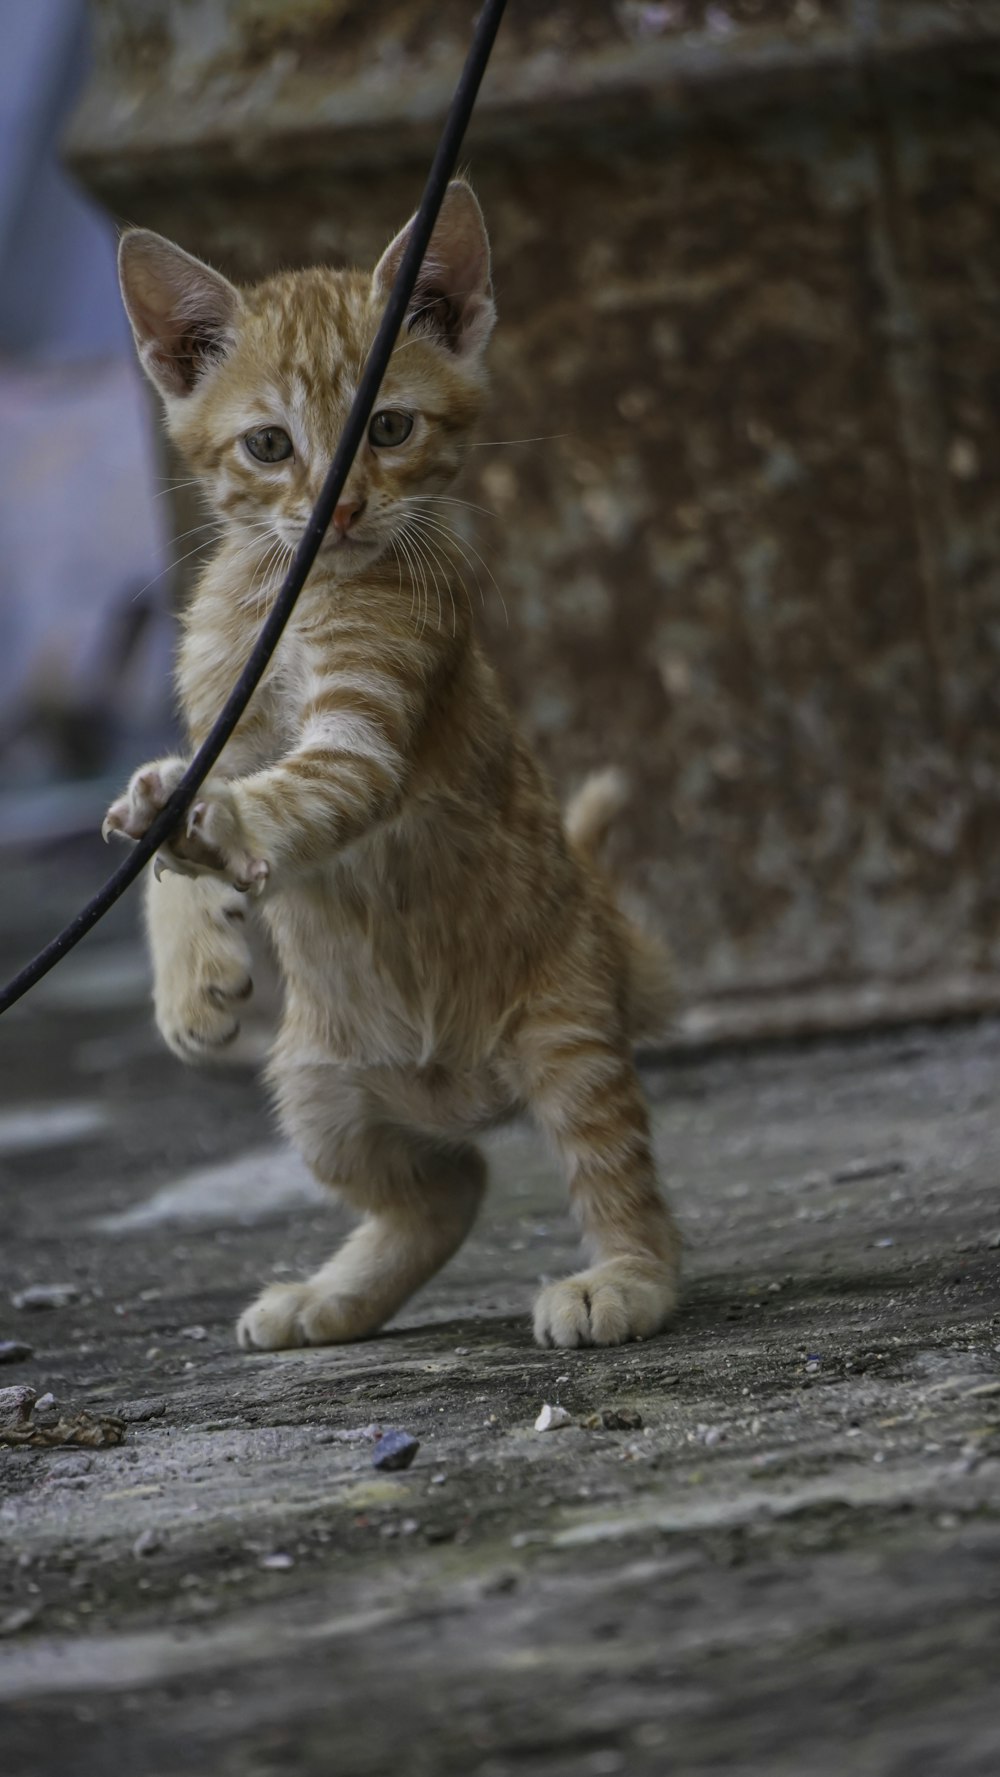 a cat holding a sword